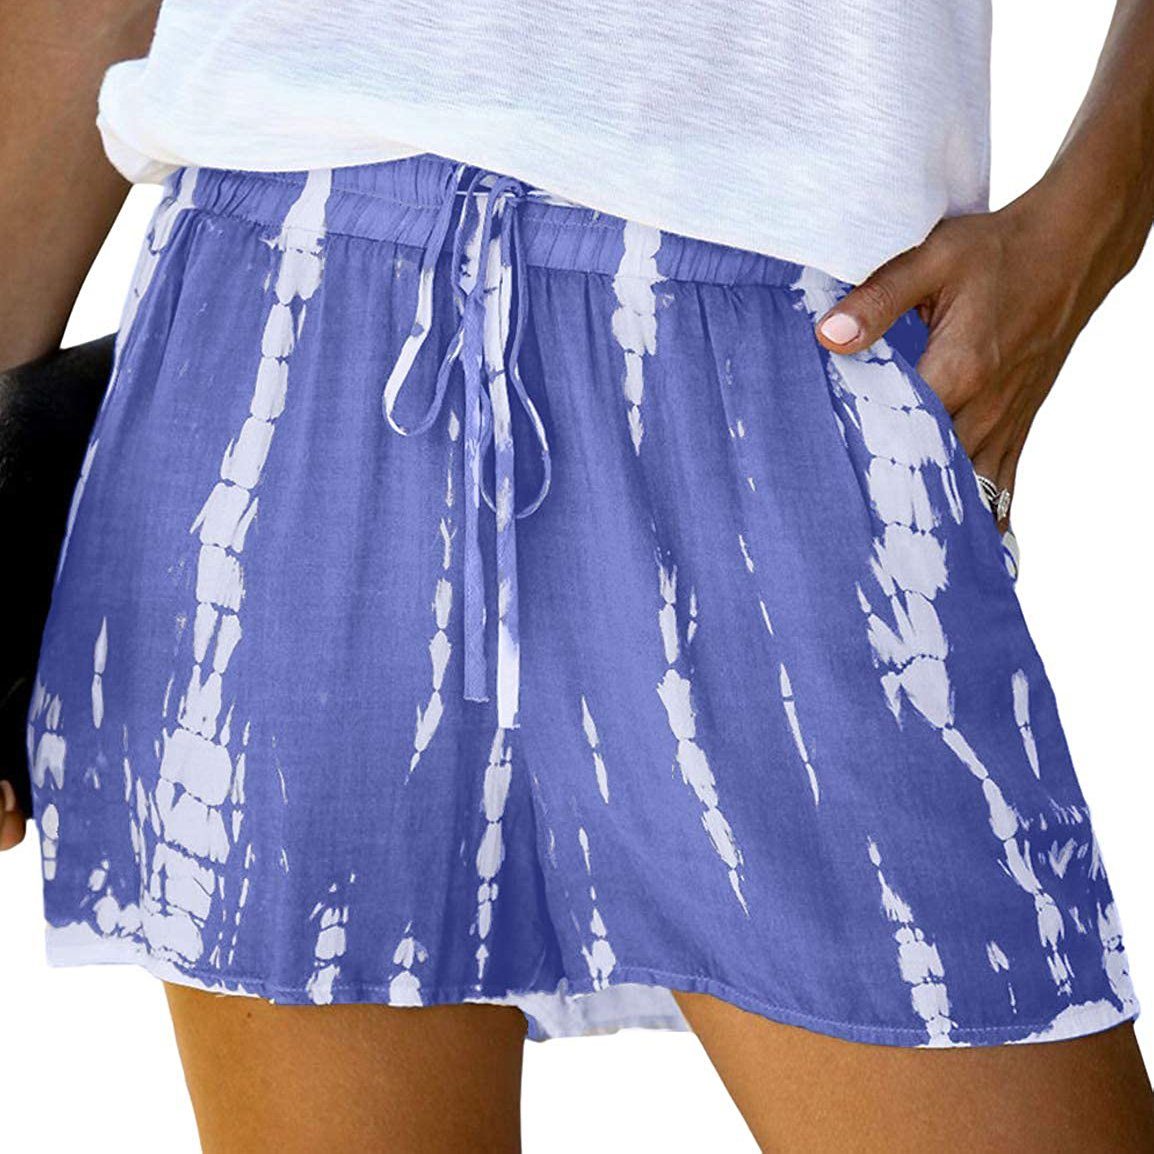 Doublju Women's Elastic Waist Comfy Casual Shorts with Pockets